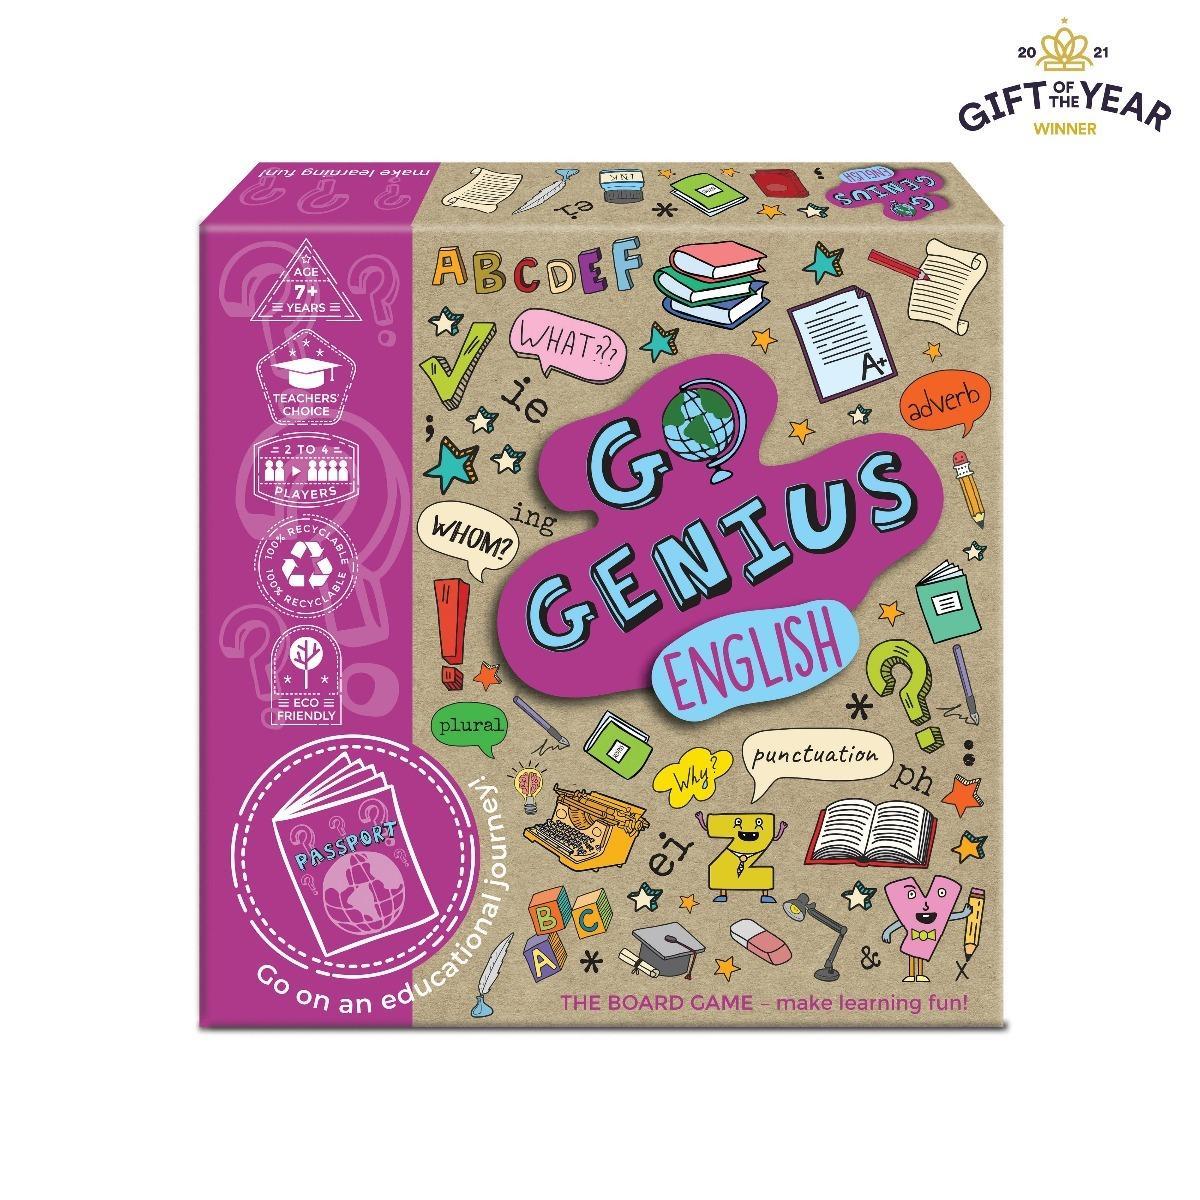 Go Genius English - The Educational Board Game - GOFY Winner! - Make Learning Fu